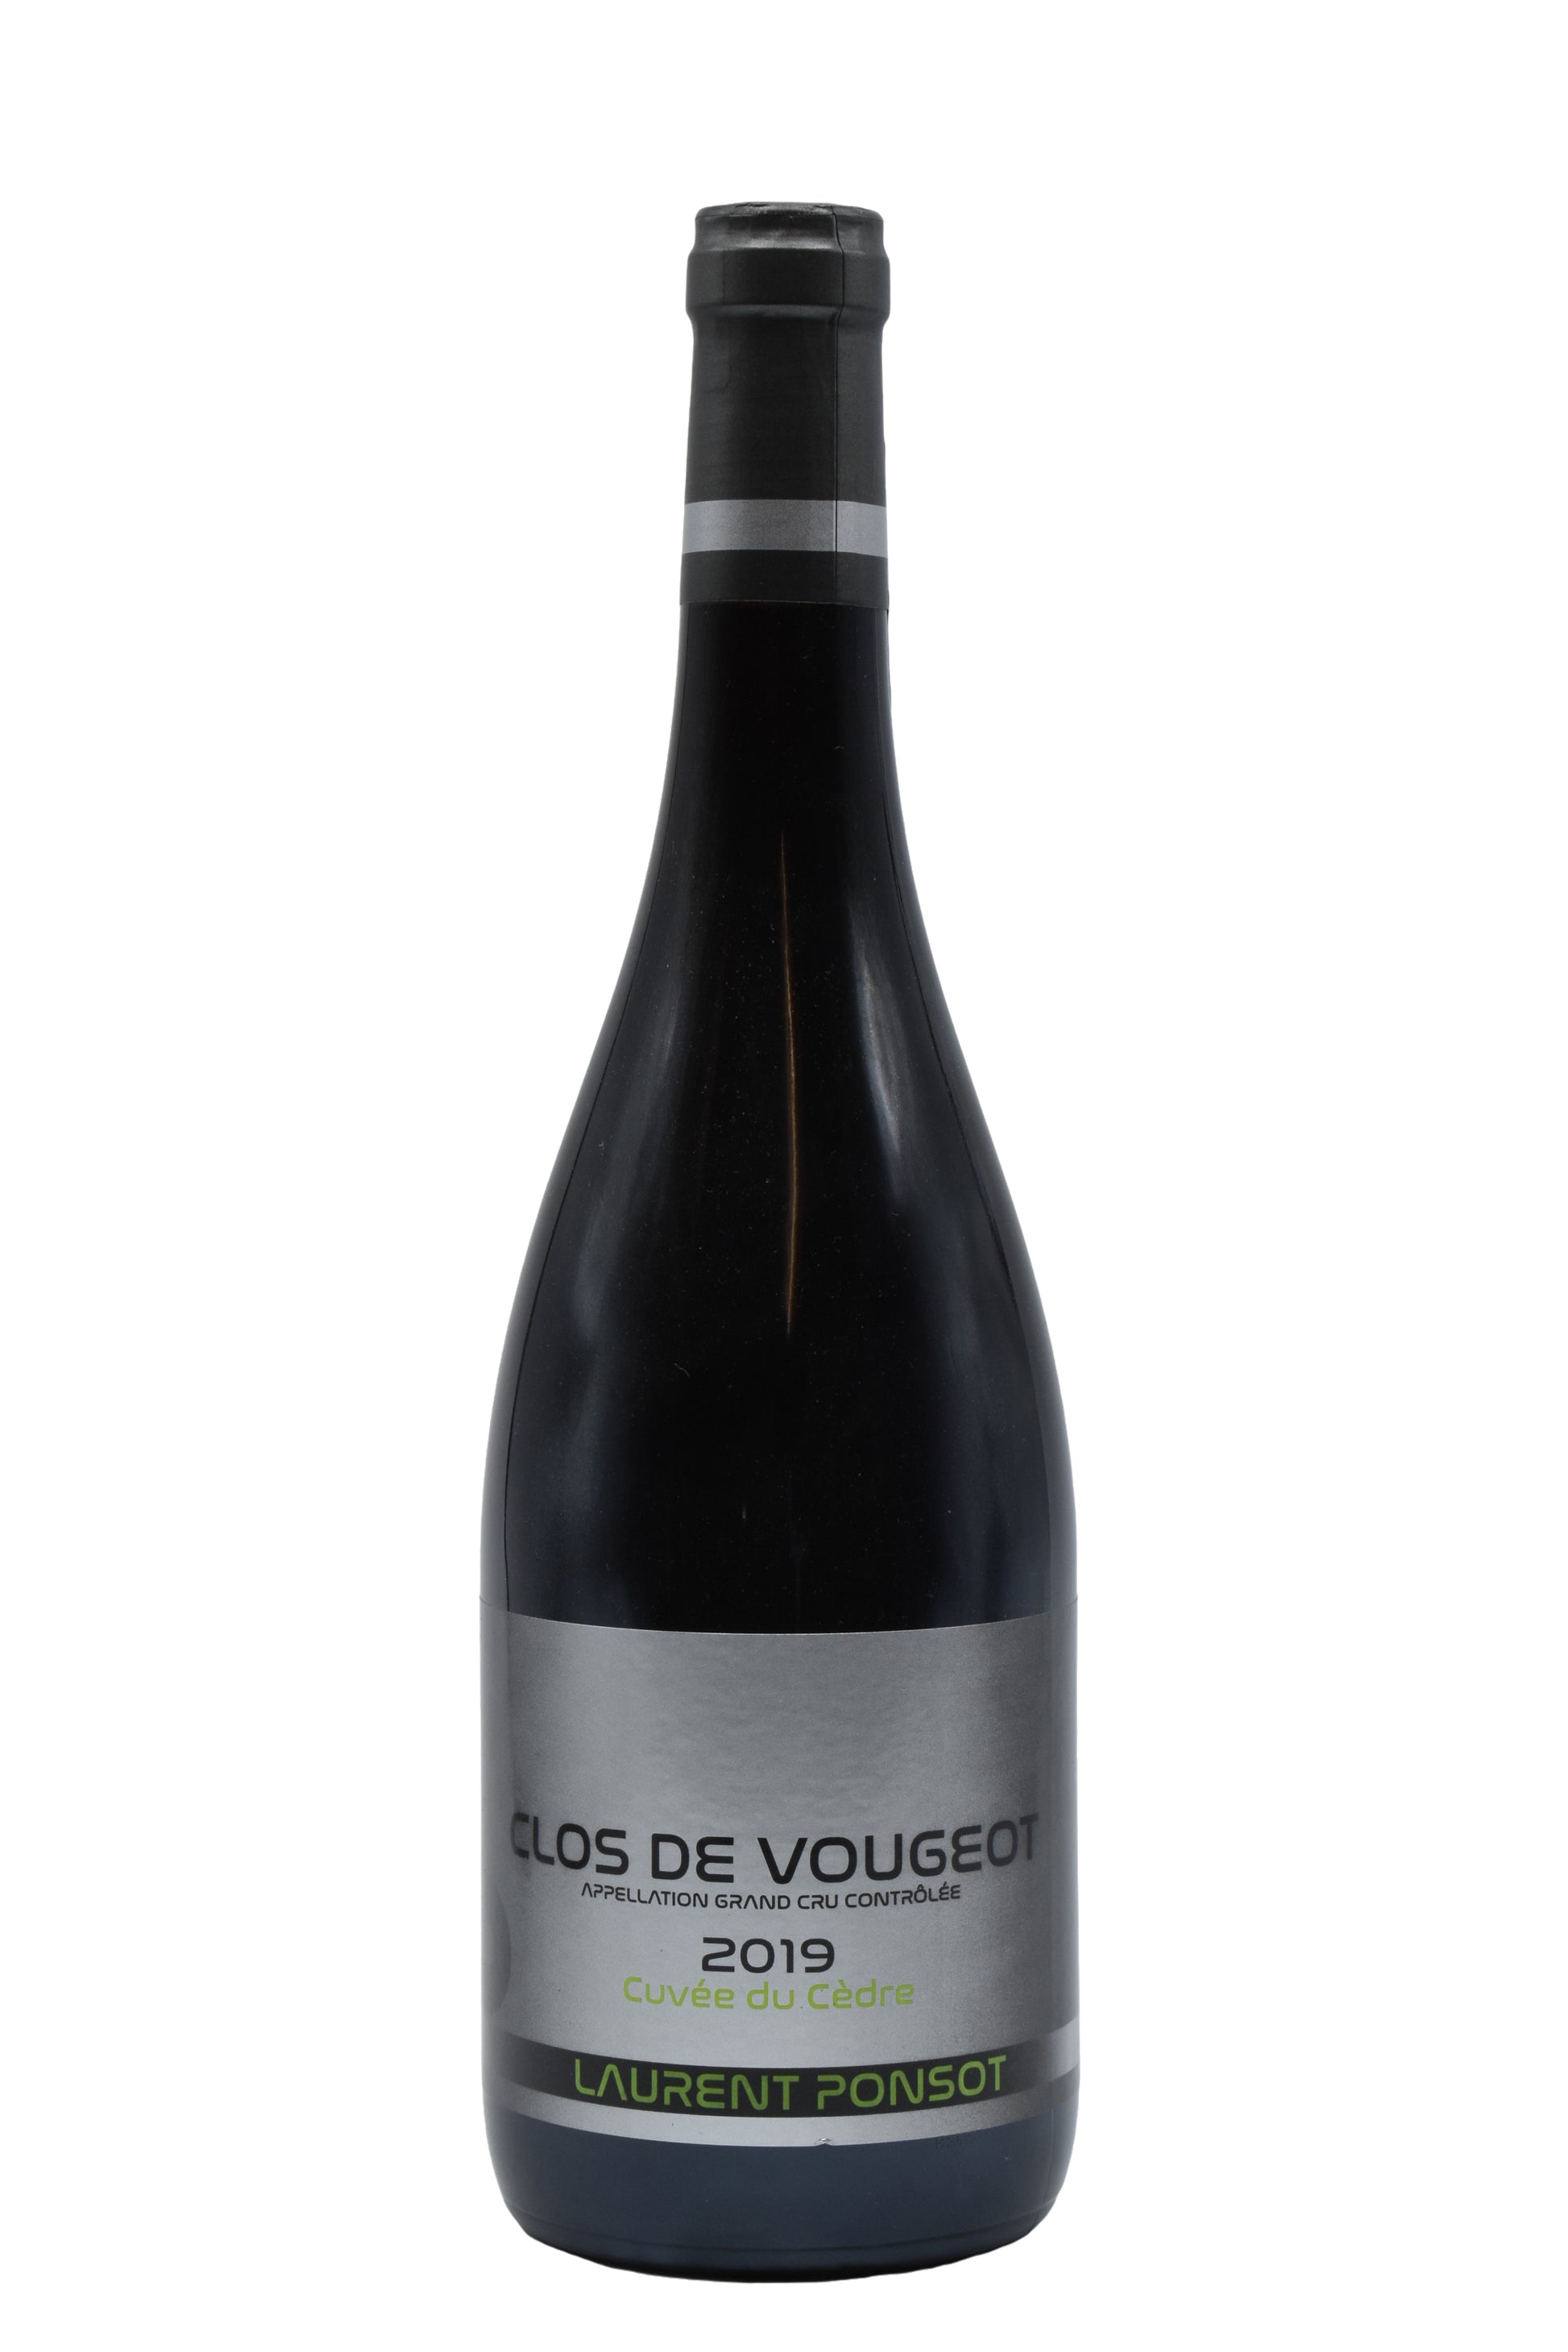 2019 Laurent Ponsot, Clos de Vougeot Cuvee du Cedre Grand Cru 750ml - Walker Wine Co.